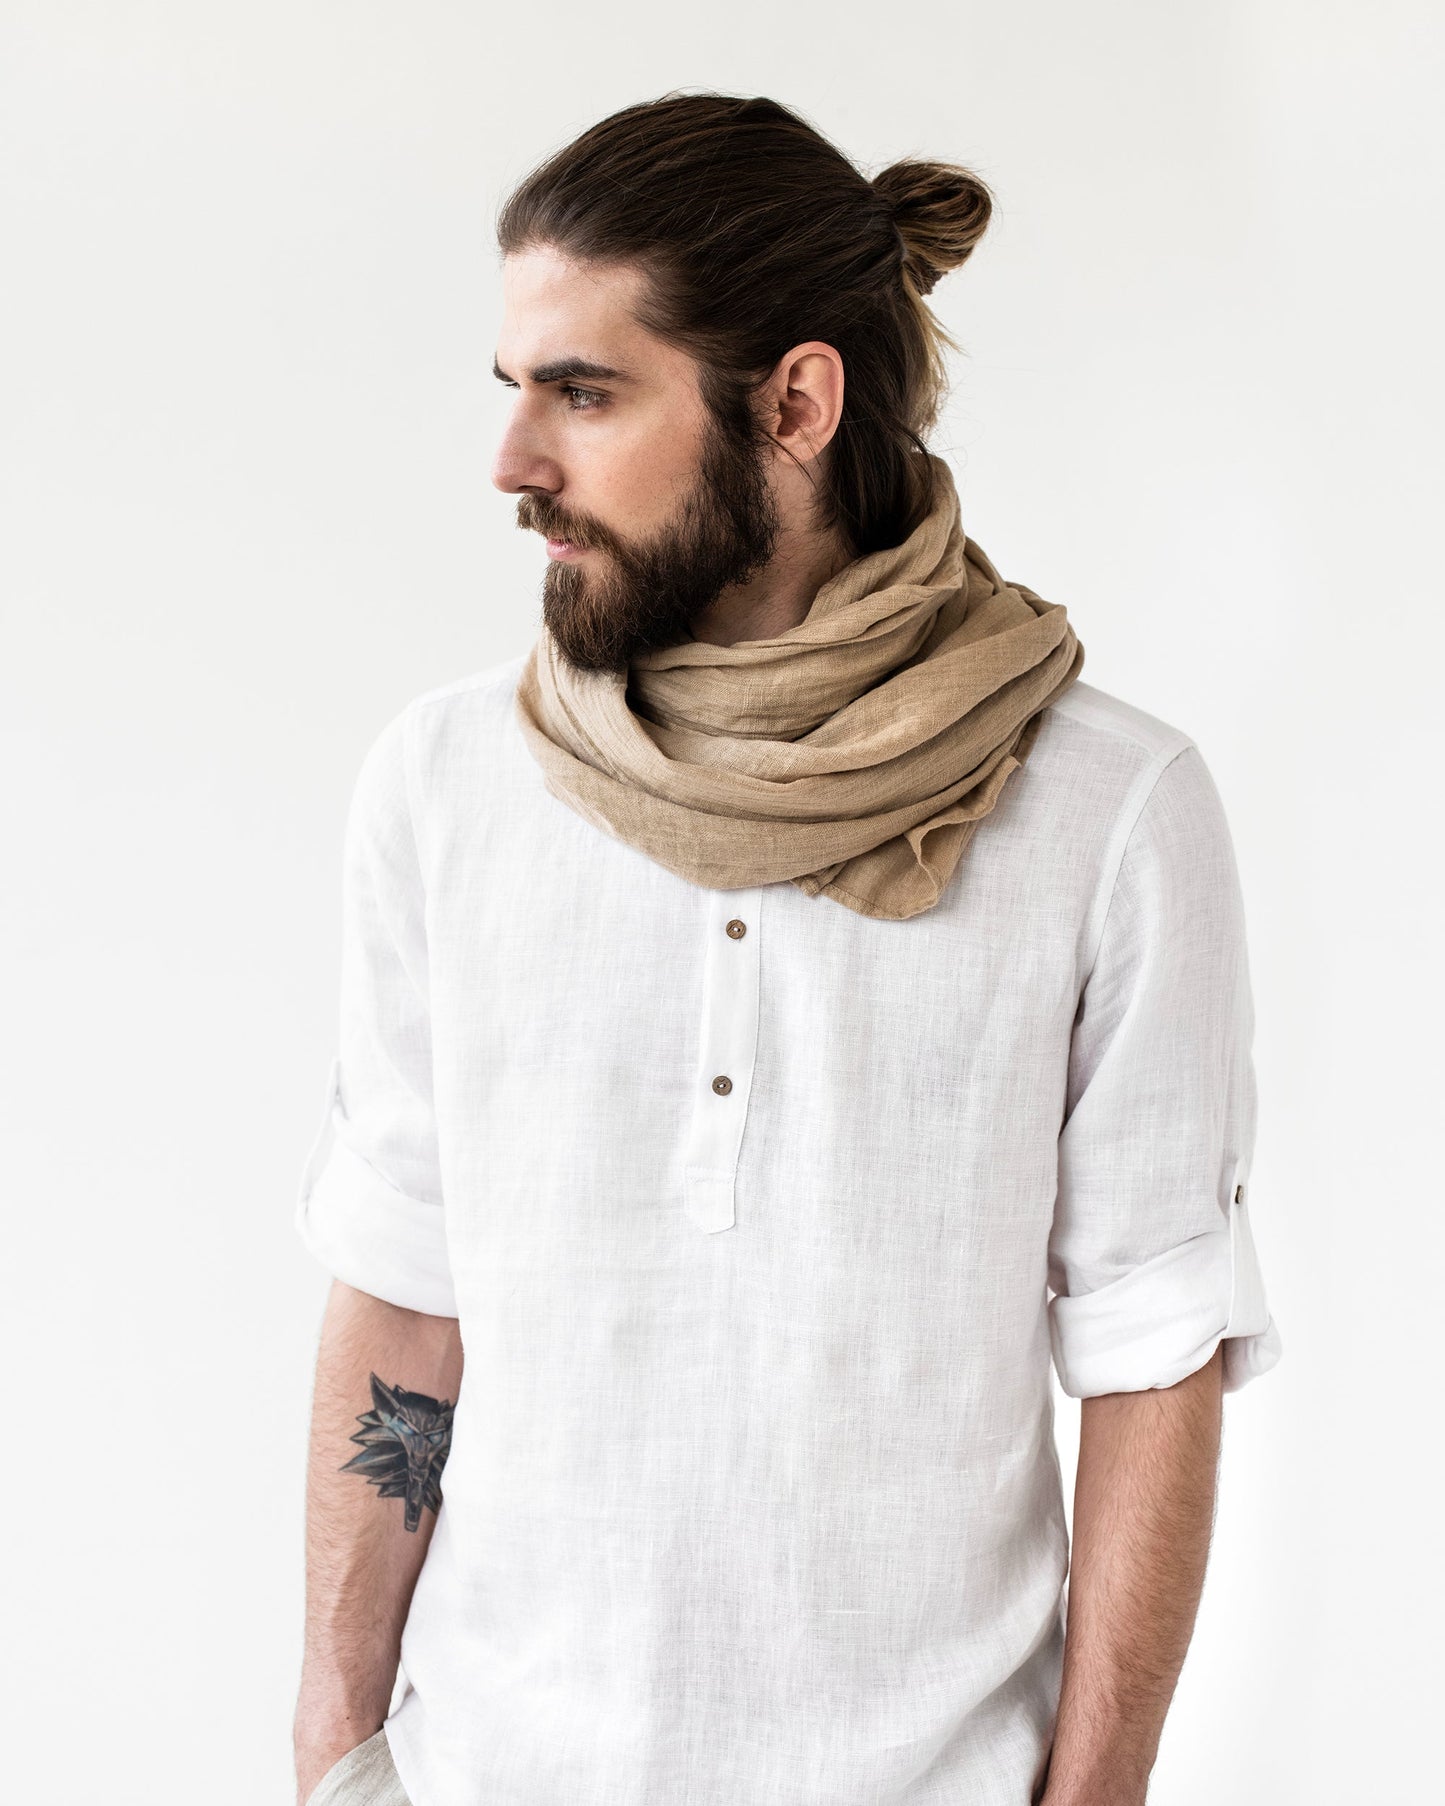 Men's linen scarf in Cappuccino - MagicLinen